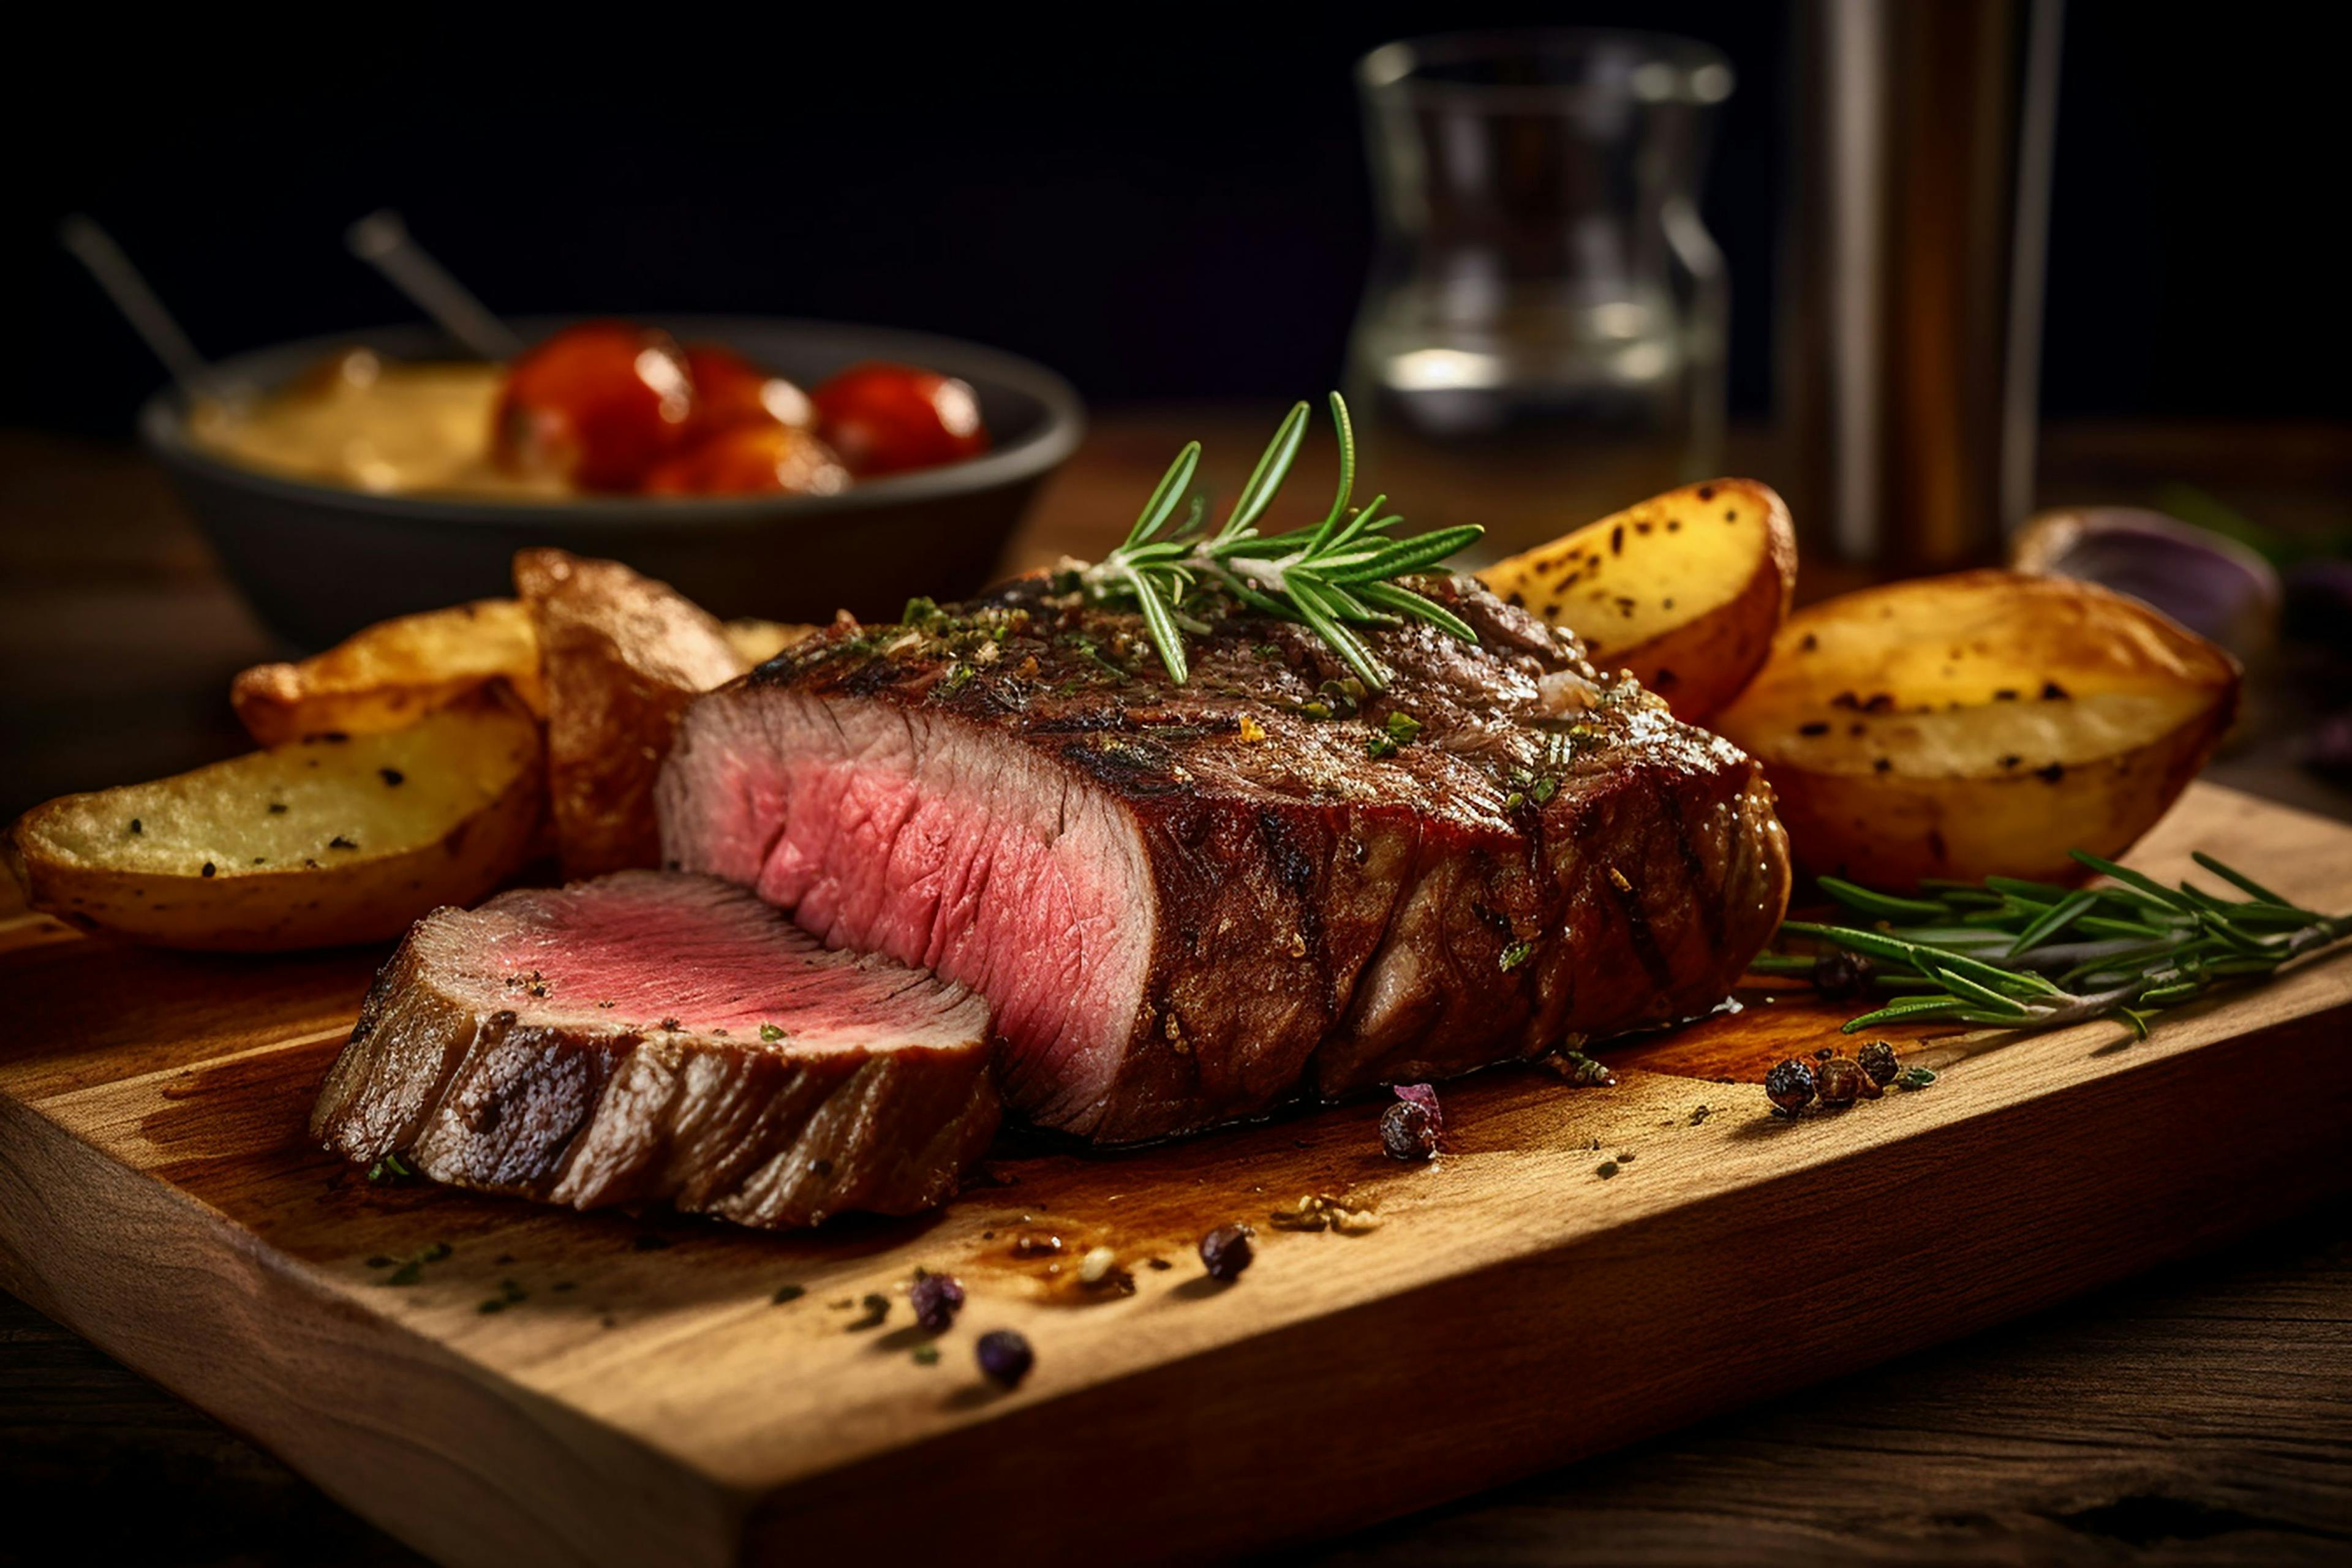 Steak on cutting board | Image Credit: Rishieka – stock.adobe.com